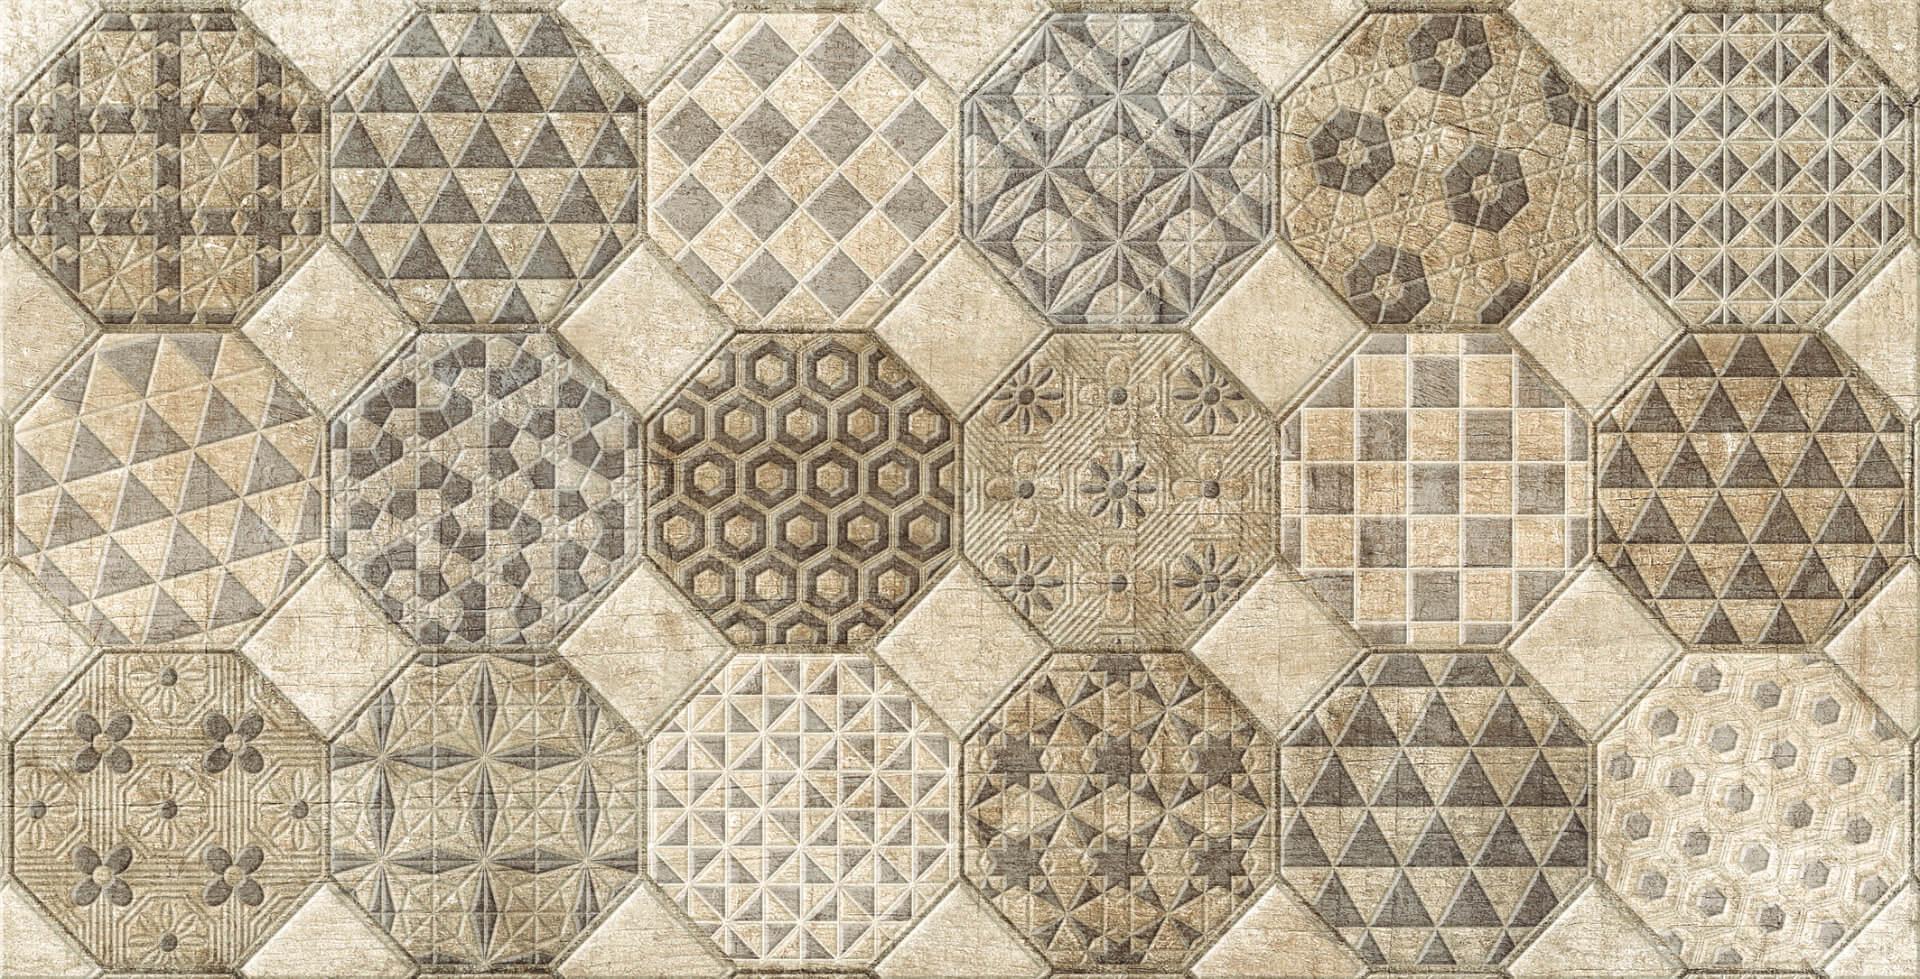 GVT Tiles for Bathroom Tiles, Kitchen Tiles, Accent Tiles